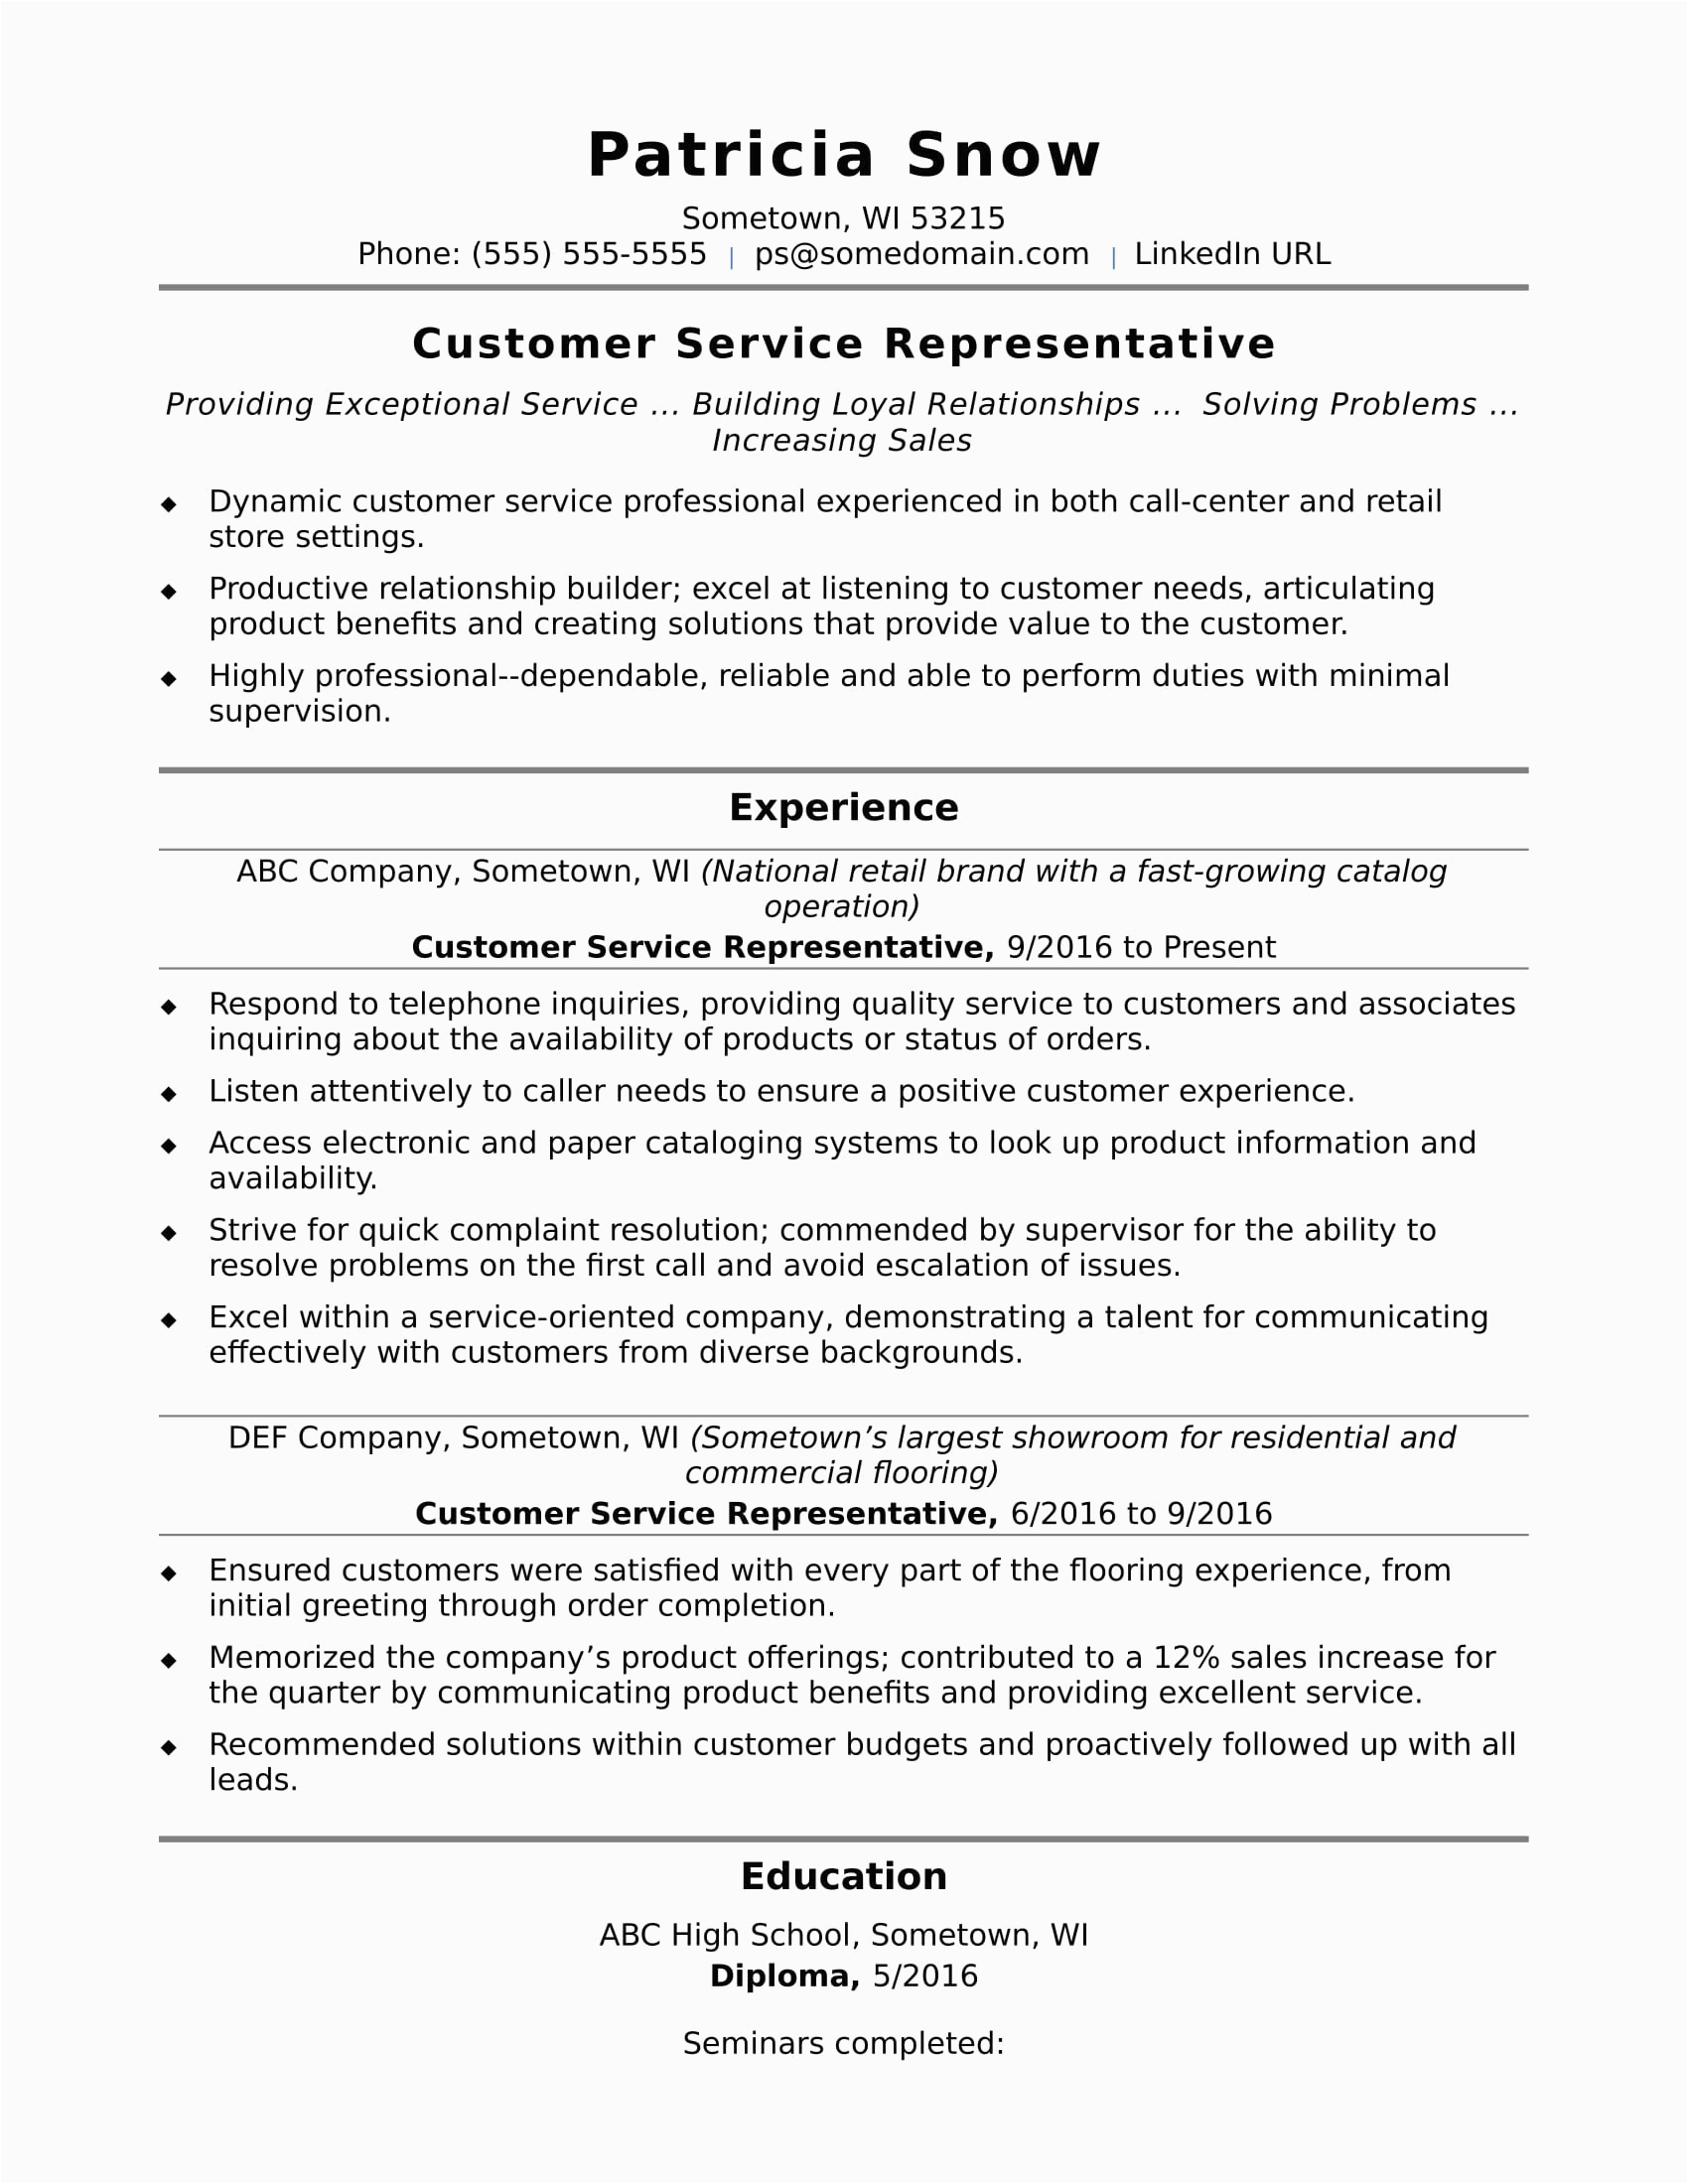 Customer Service Representative Resume Objective Samples Customer Service Representative Resume Sample